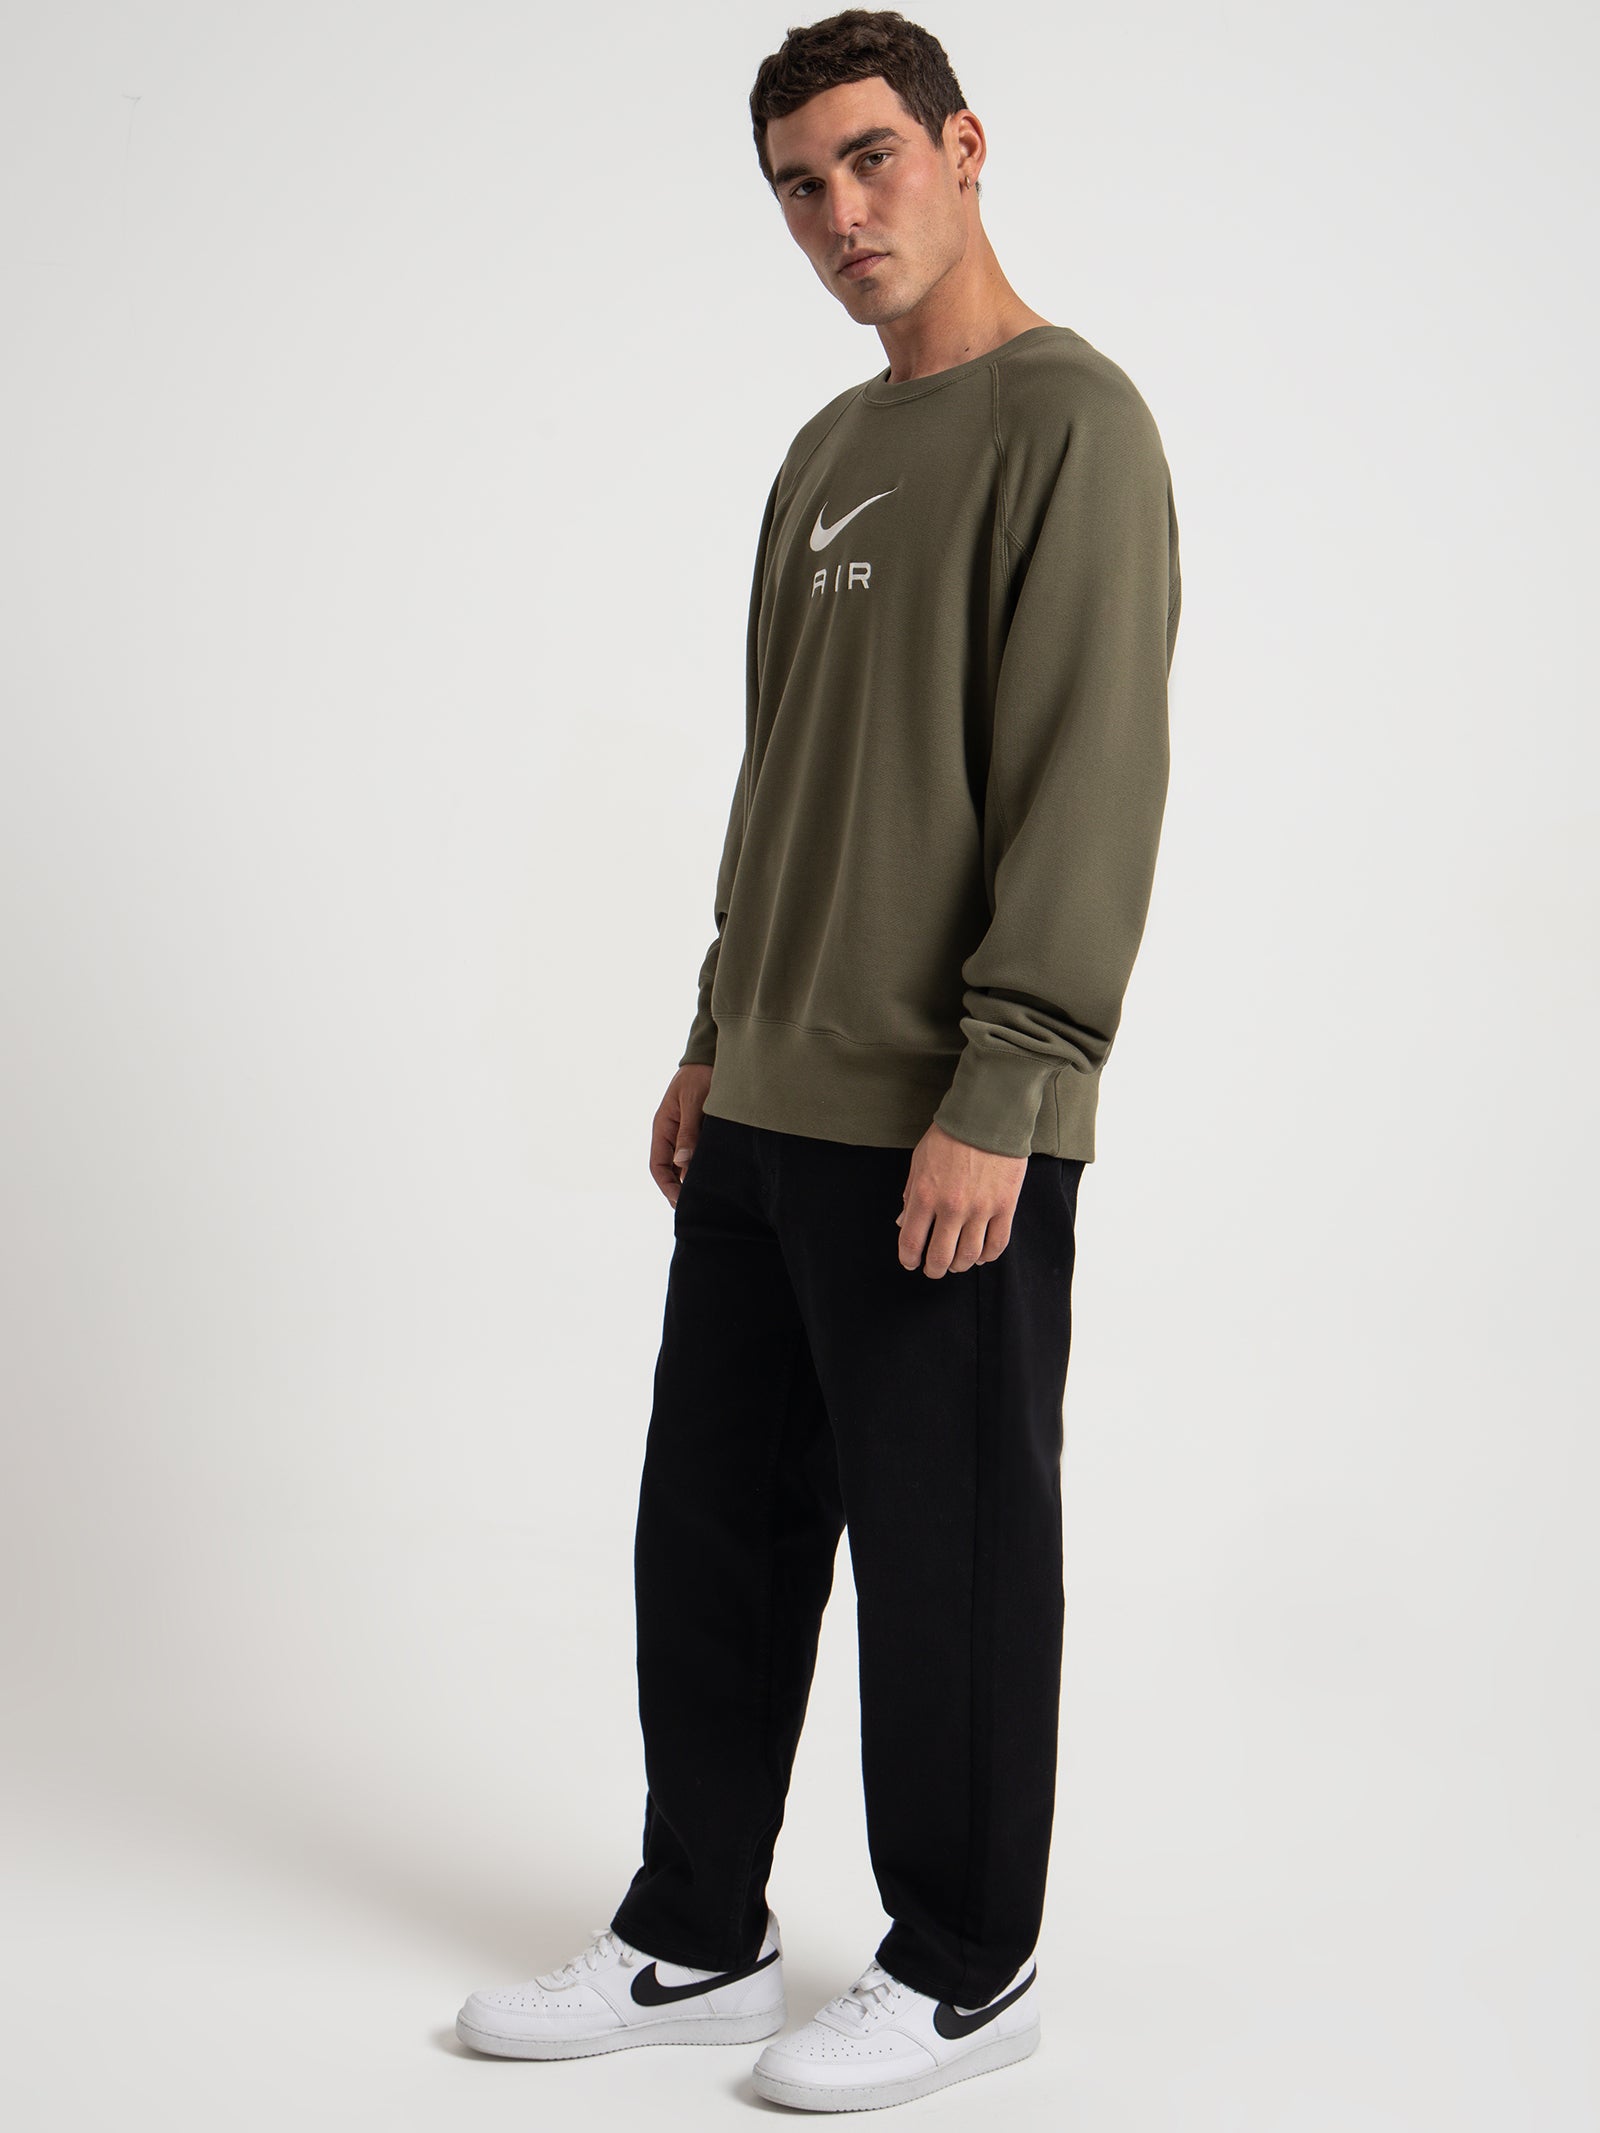 Sportswear Nike Air Fleece Terry Crew Sweater in Medium Olive - Glue Store